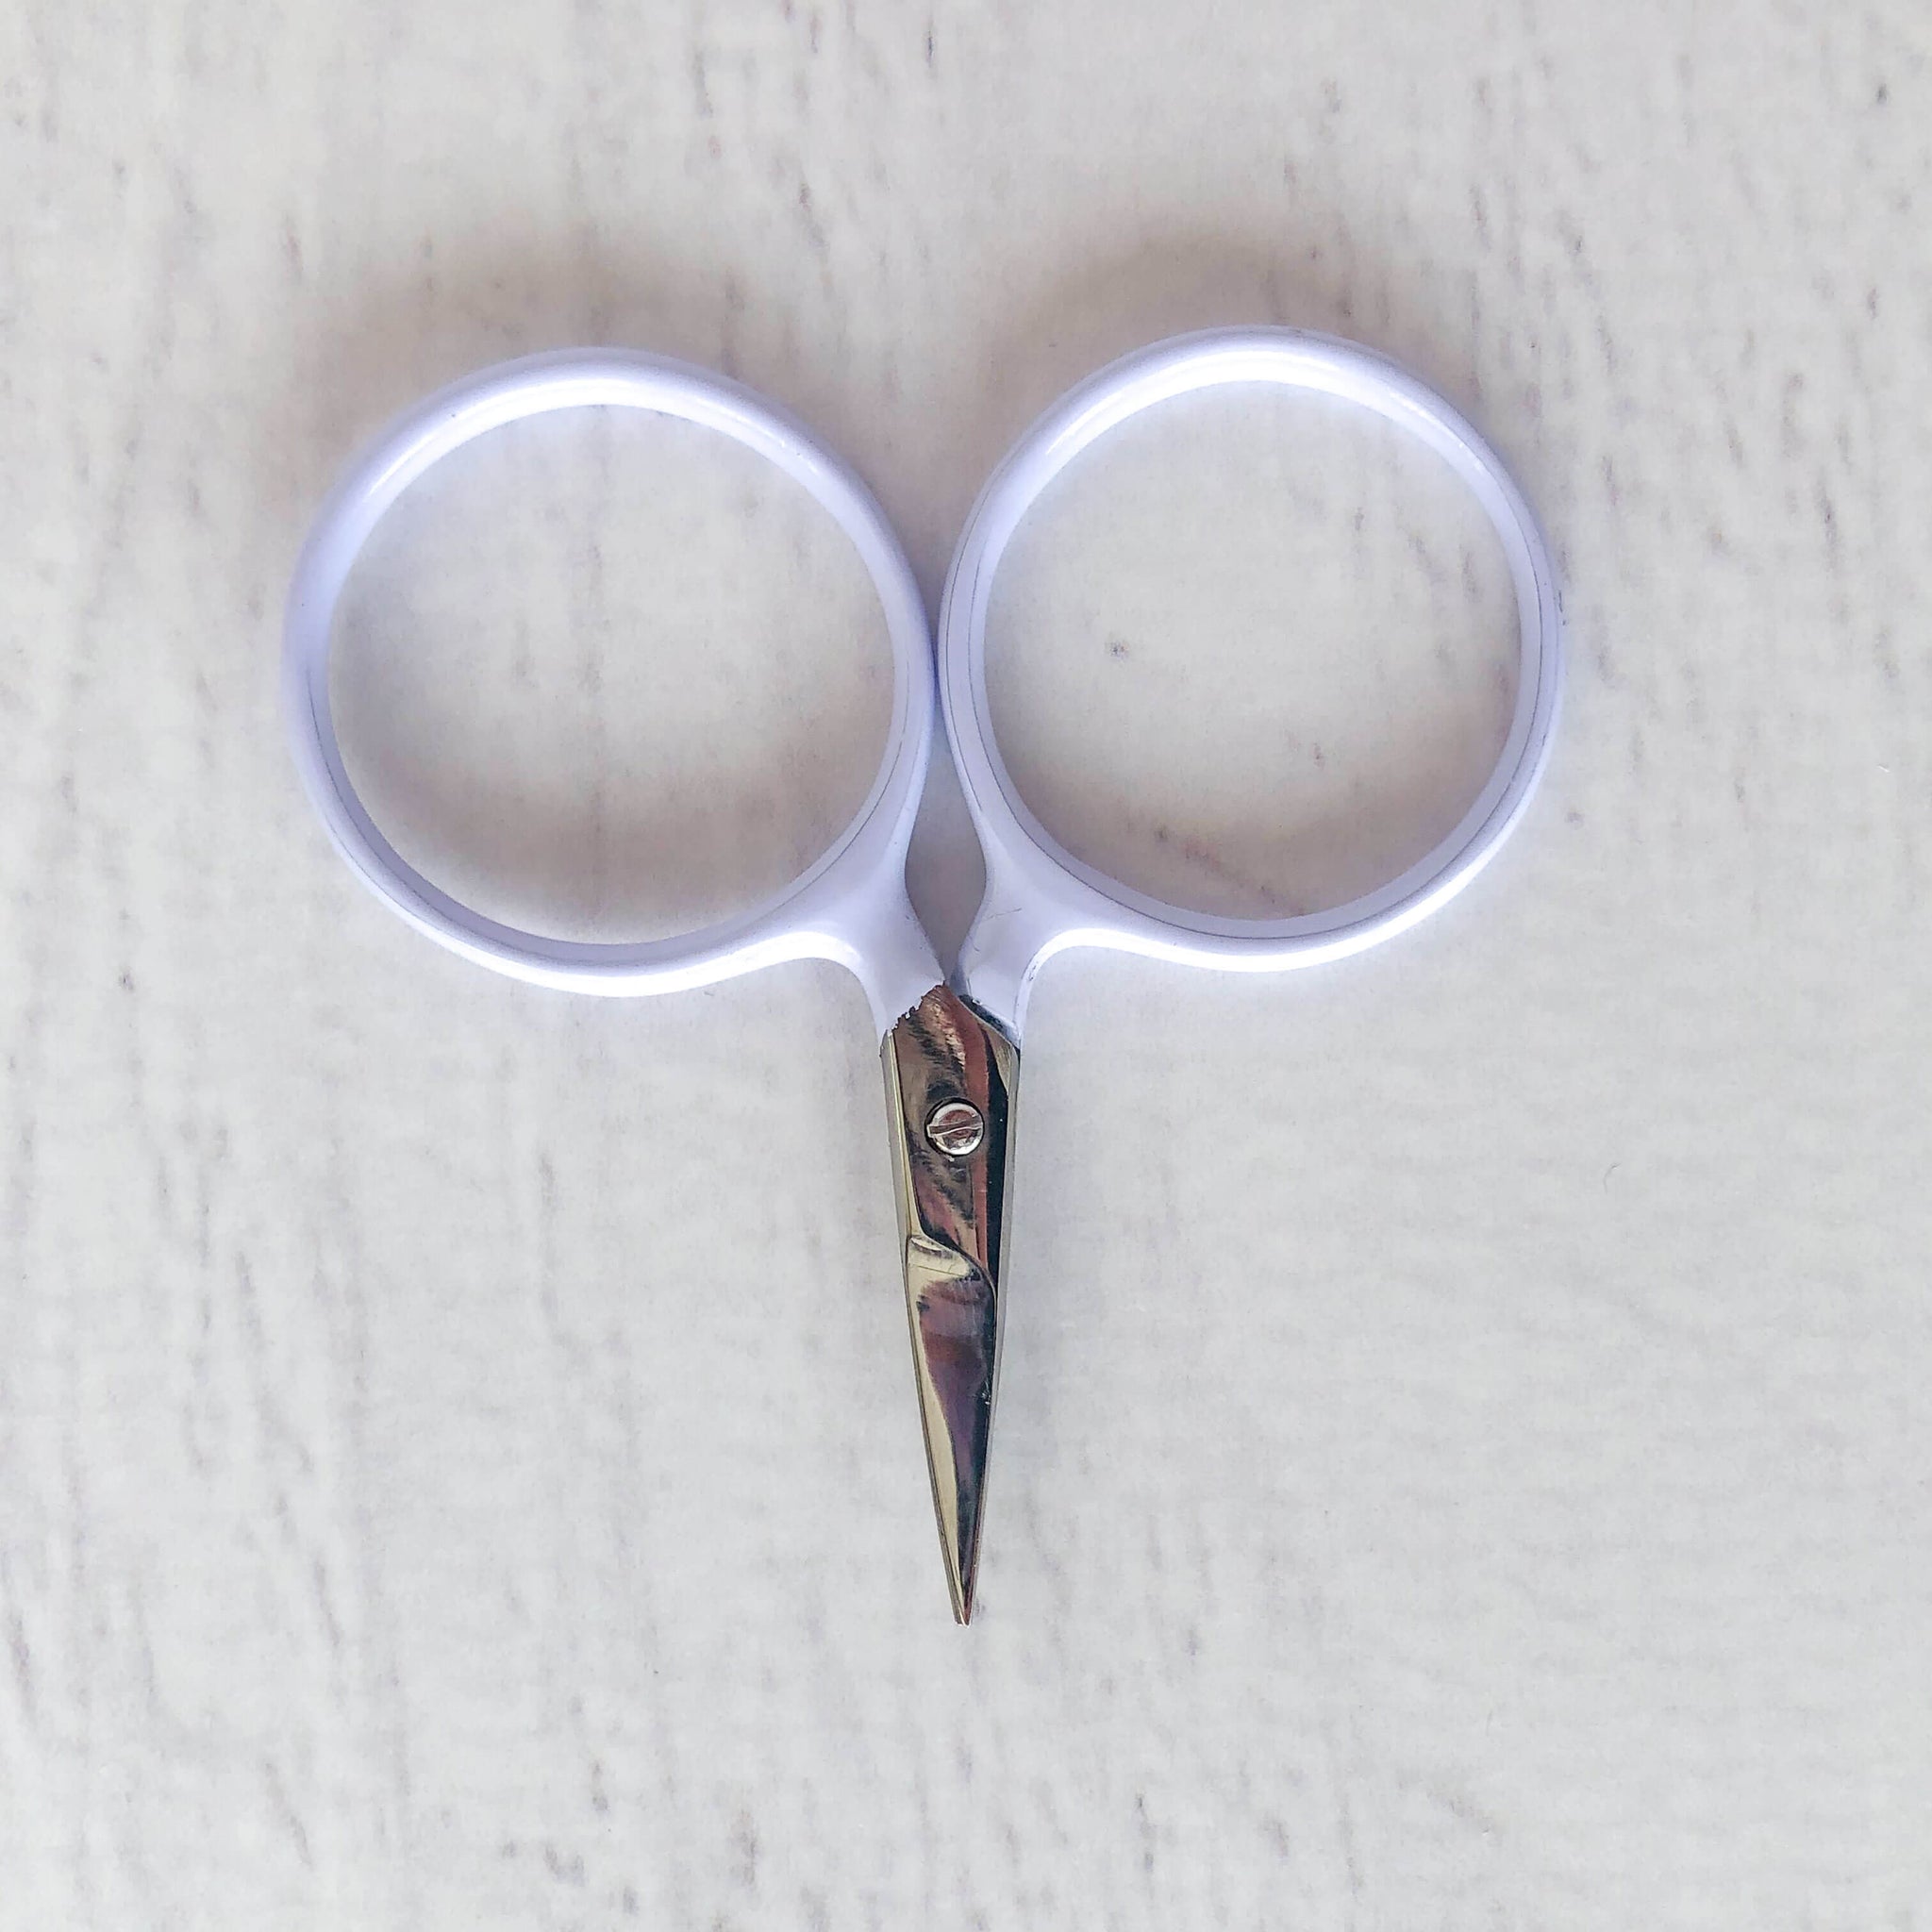 These tiny scissors : r/mildlyinteresting